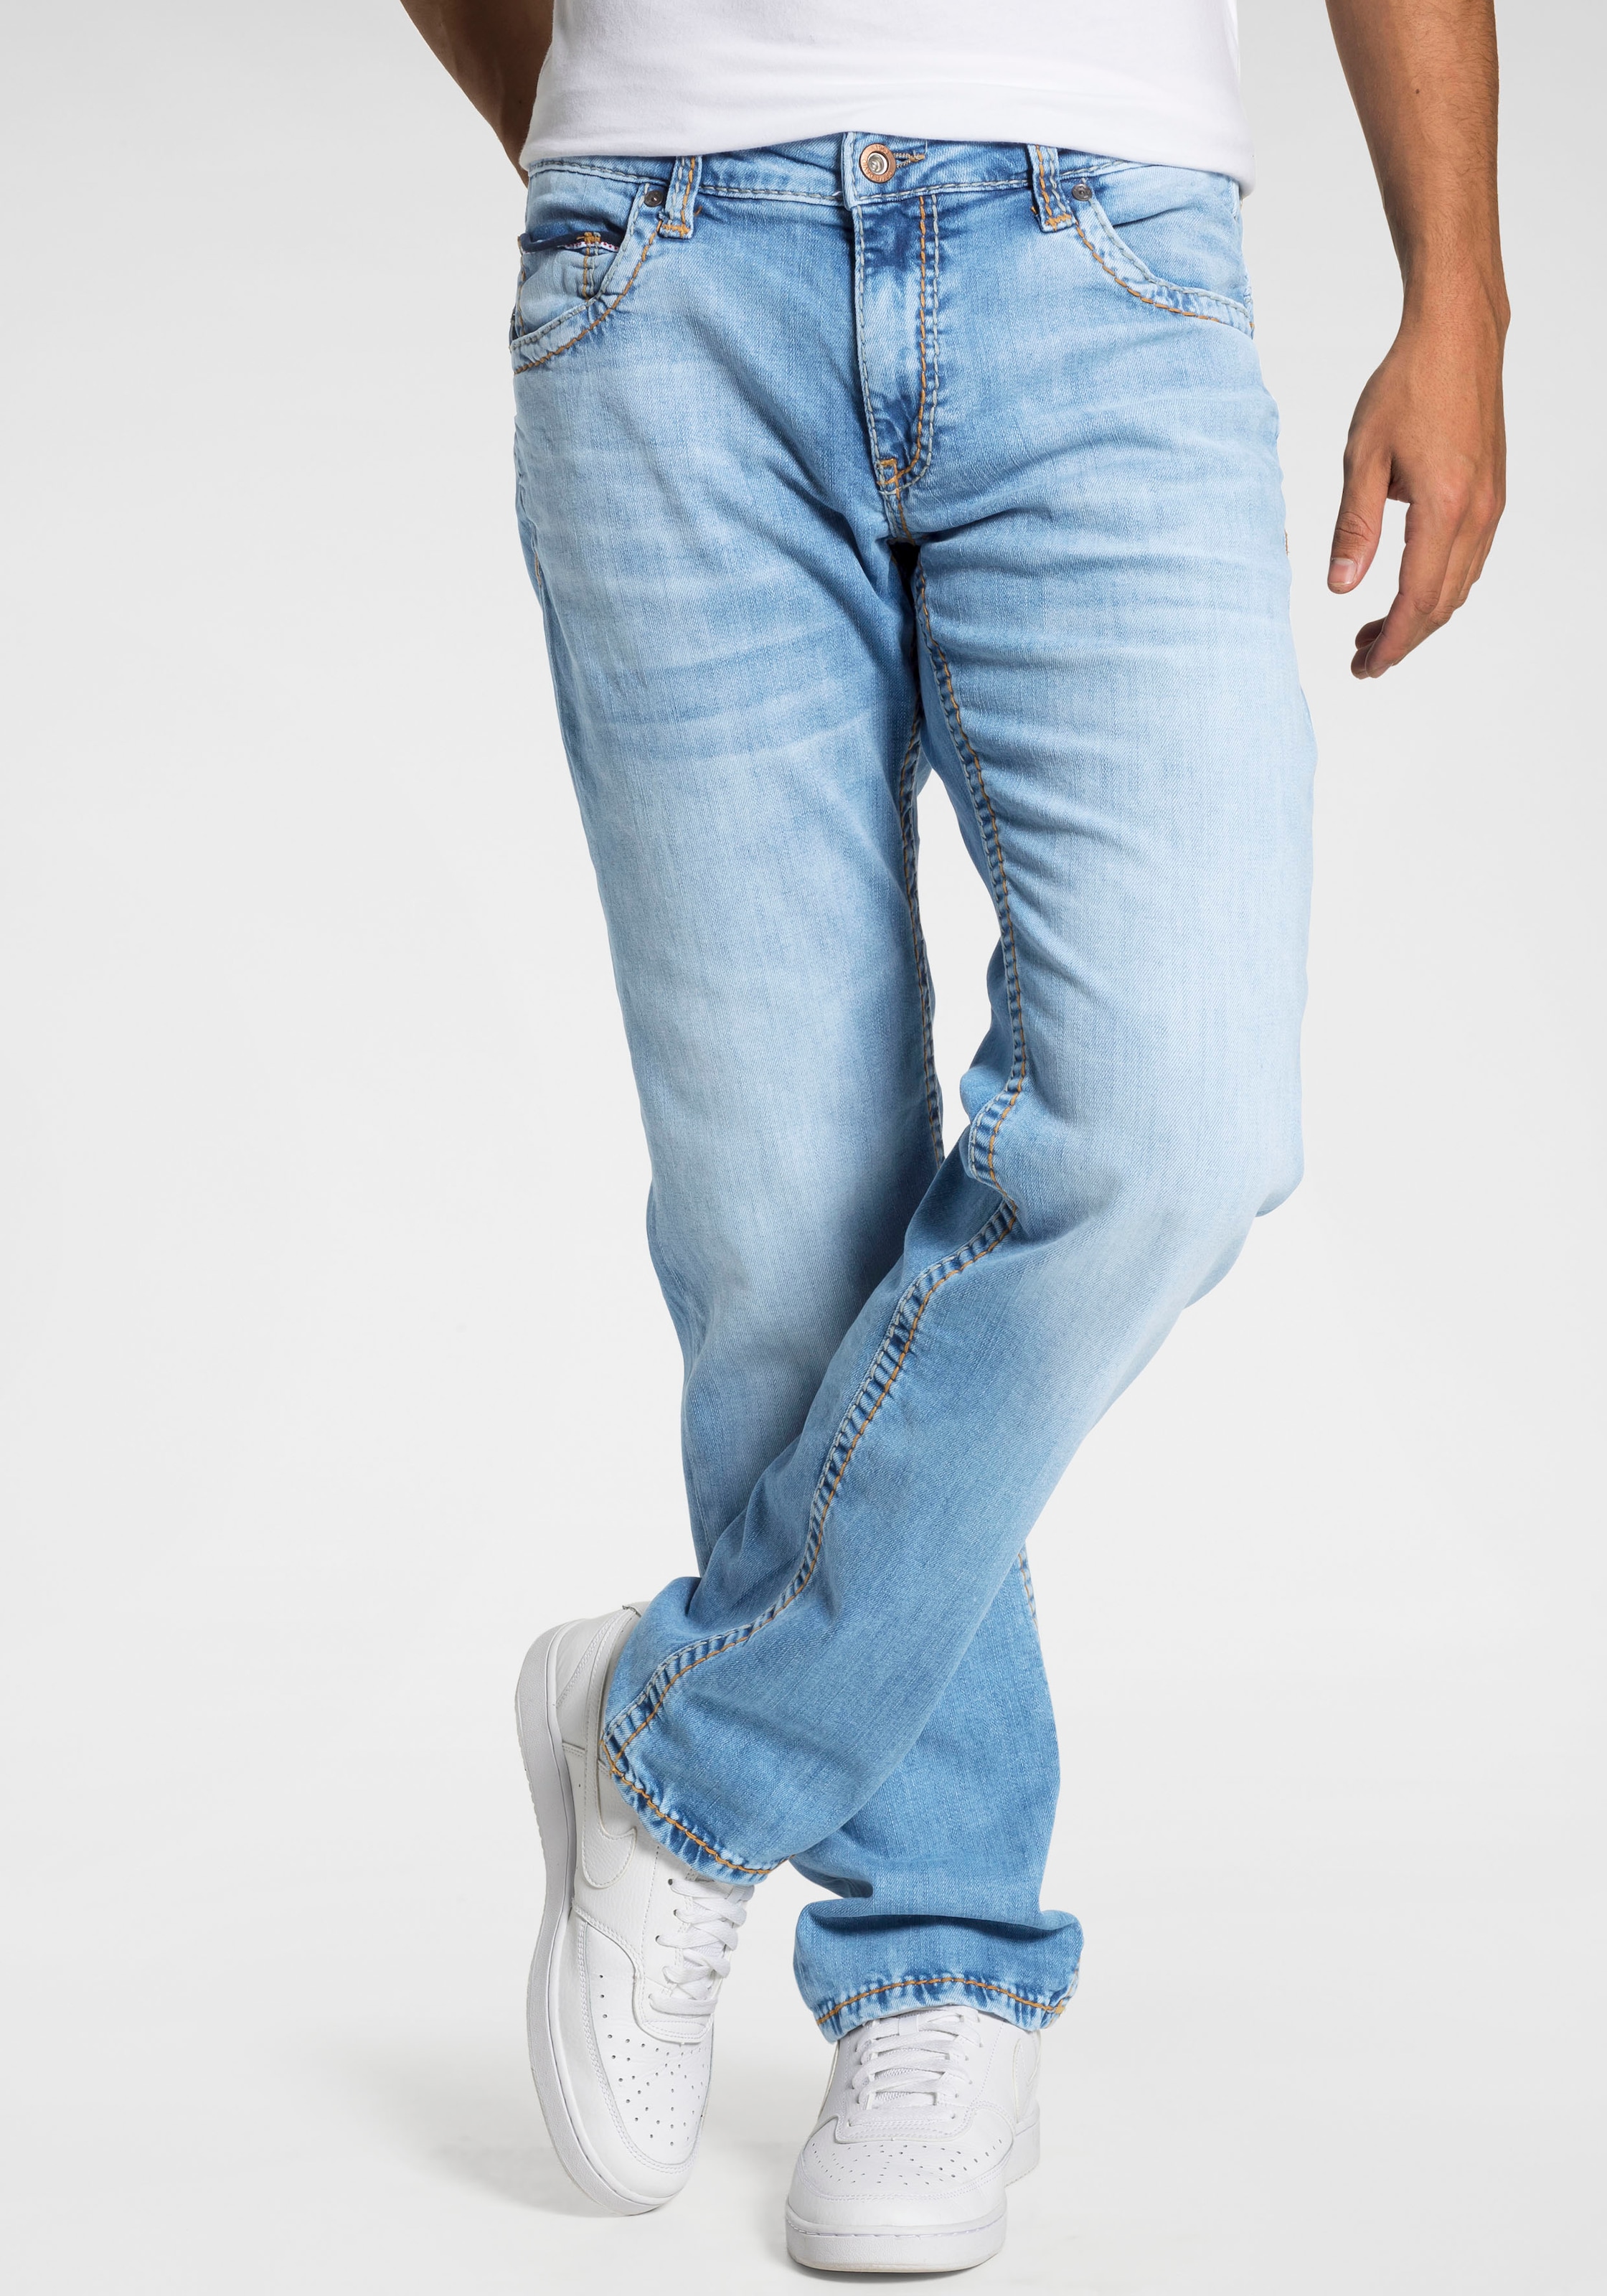 CAMP Nähten markanten shoppen DAVID | Jelmoli-Versand »CO:NO:C622«, Loose-fit-Jeans online mit